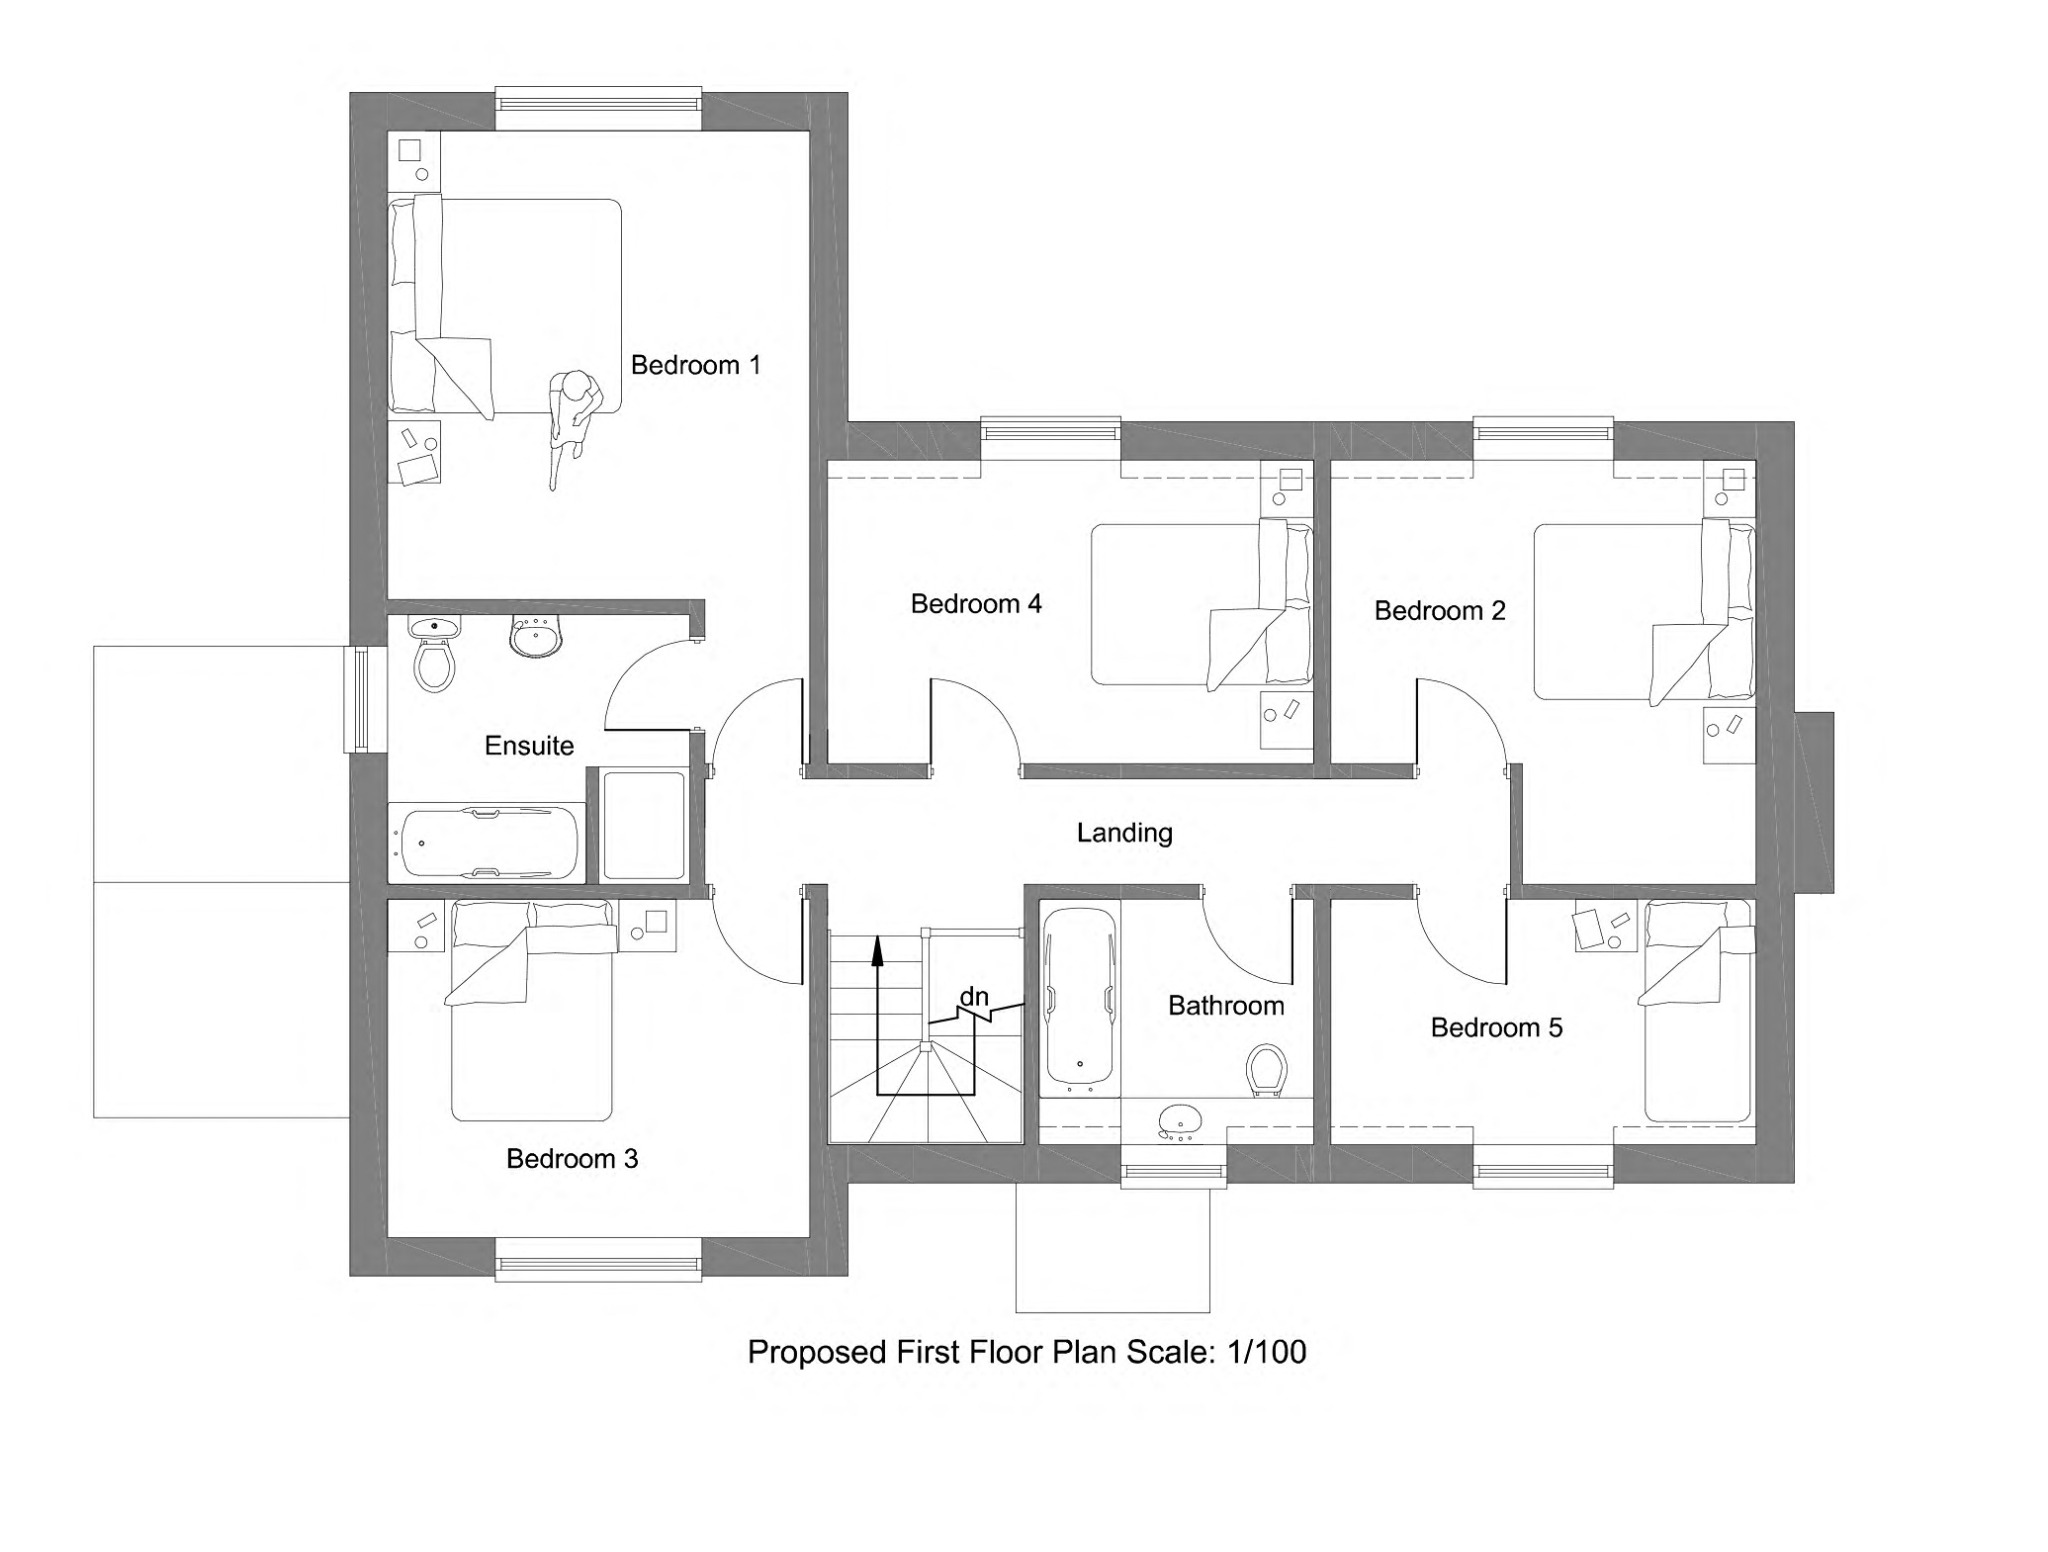 5 bed plot for sale - Property floorplan